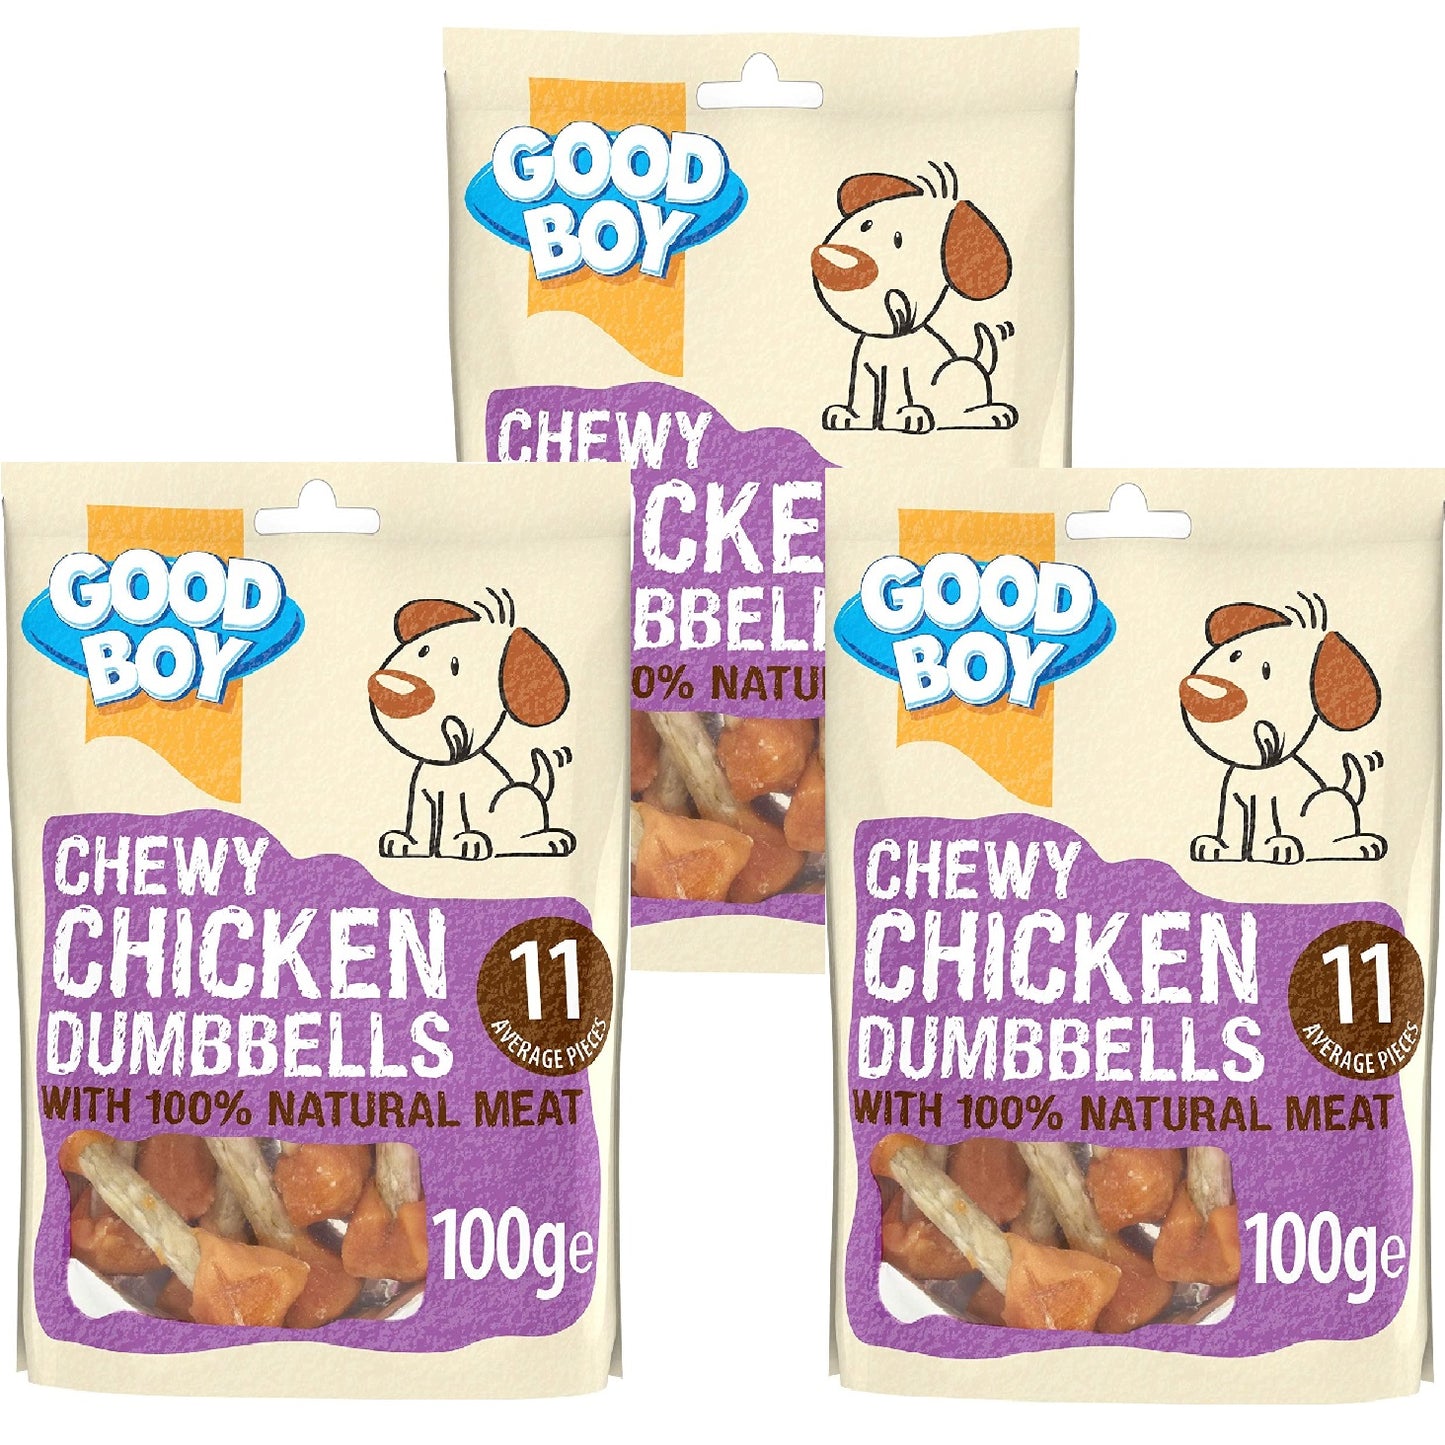 Good Boy - Chewy Chicken Dumbbells (100g)